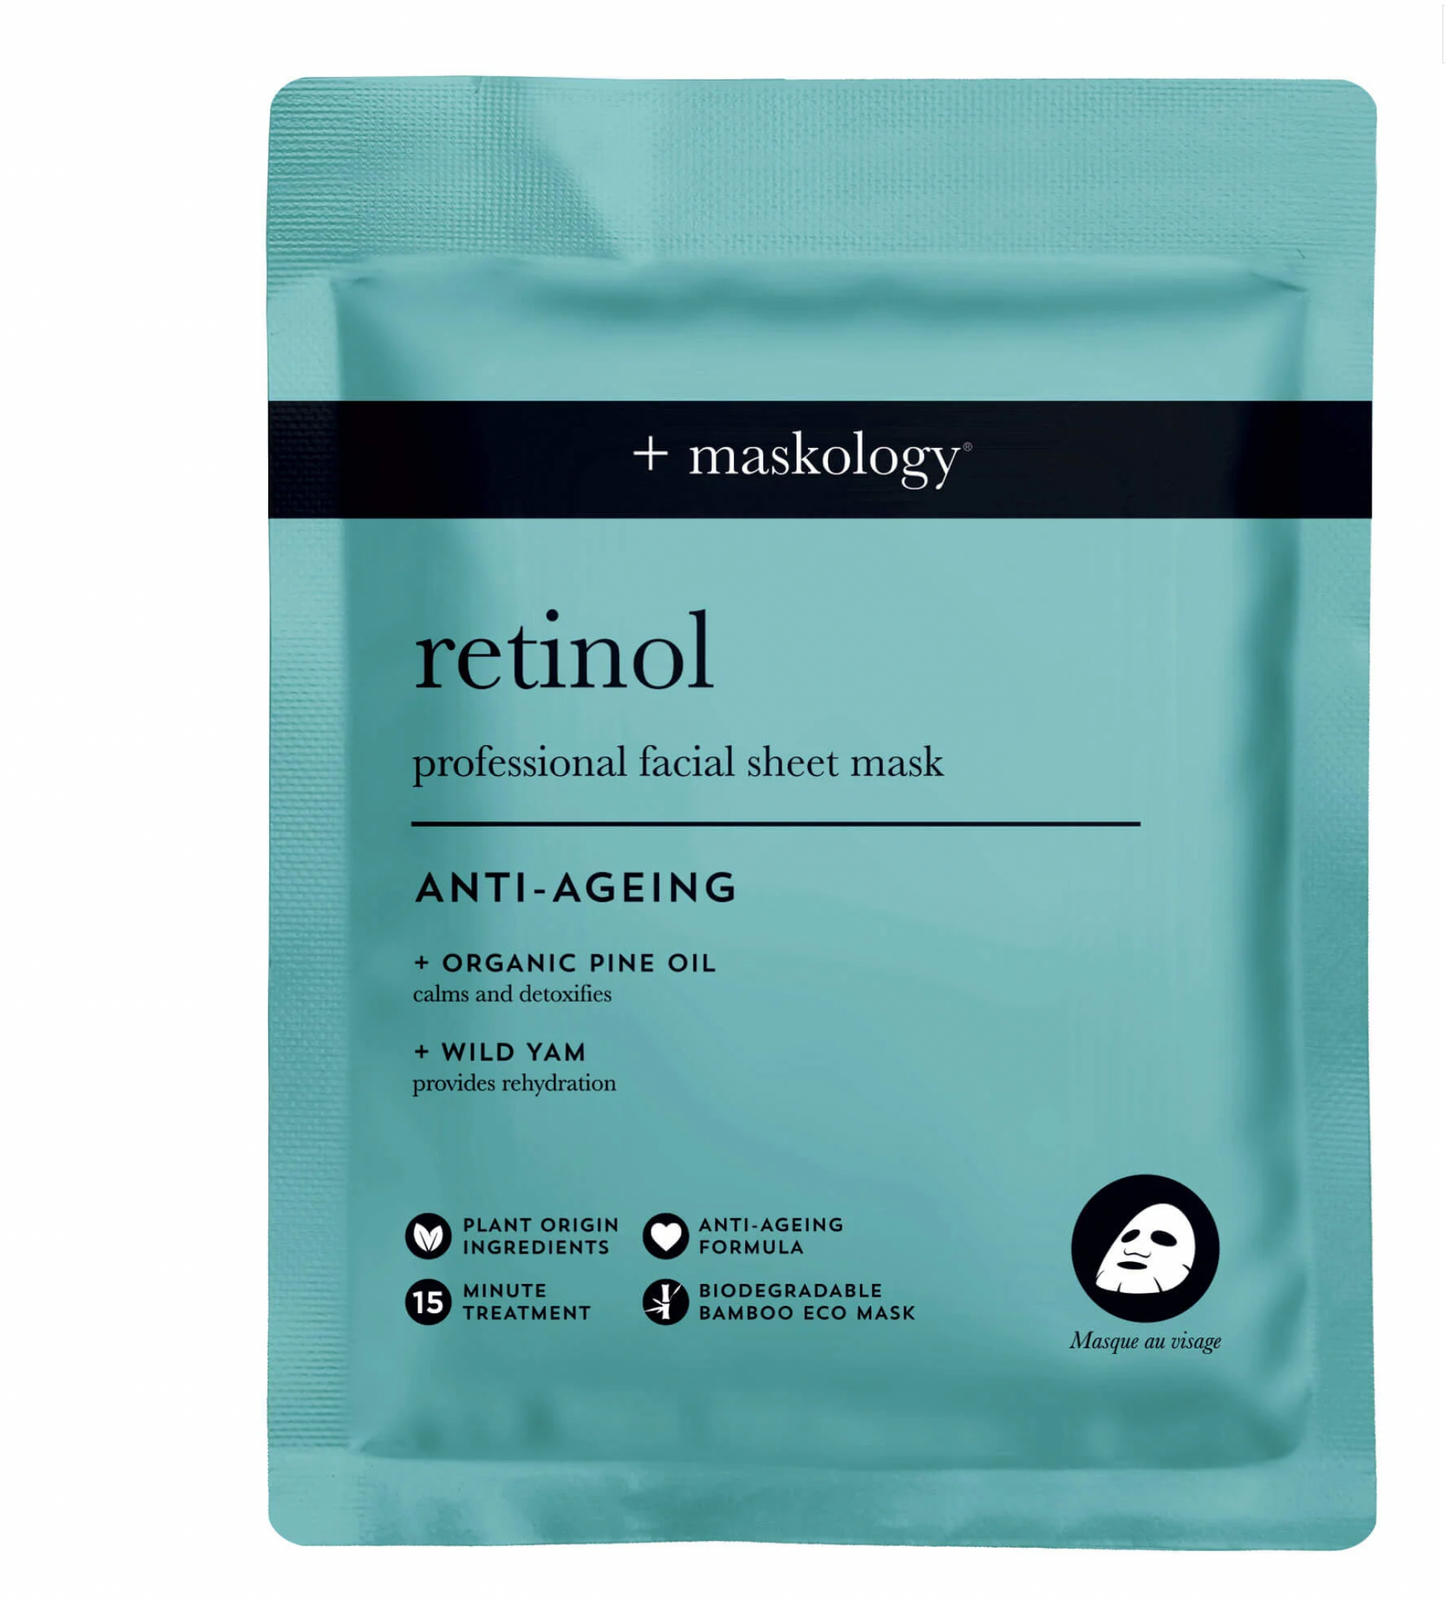 Retinol Maskology Face Mask